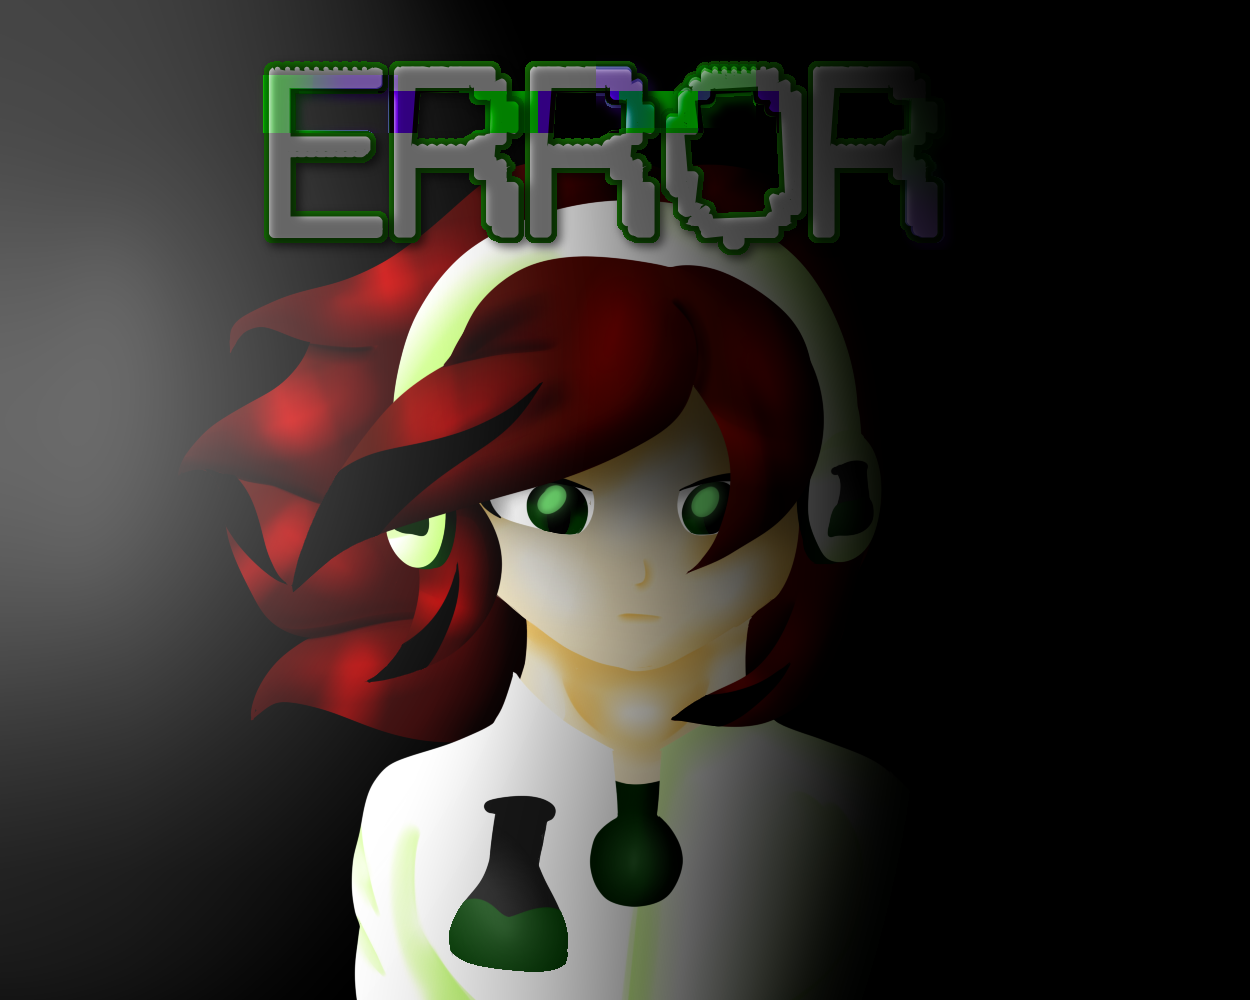 SOUR .:ERROR cover:. by xXElectric-HybridXx